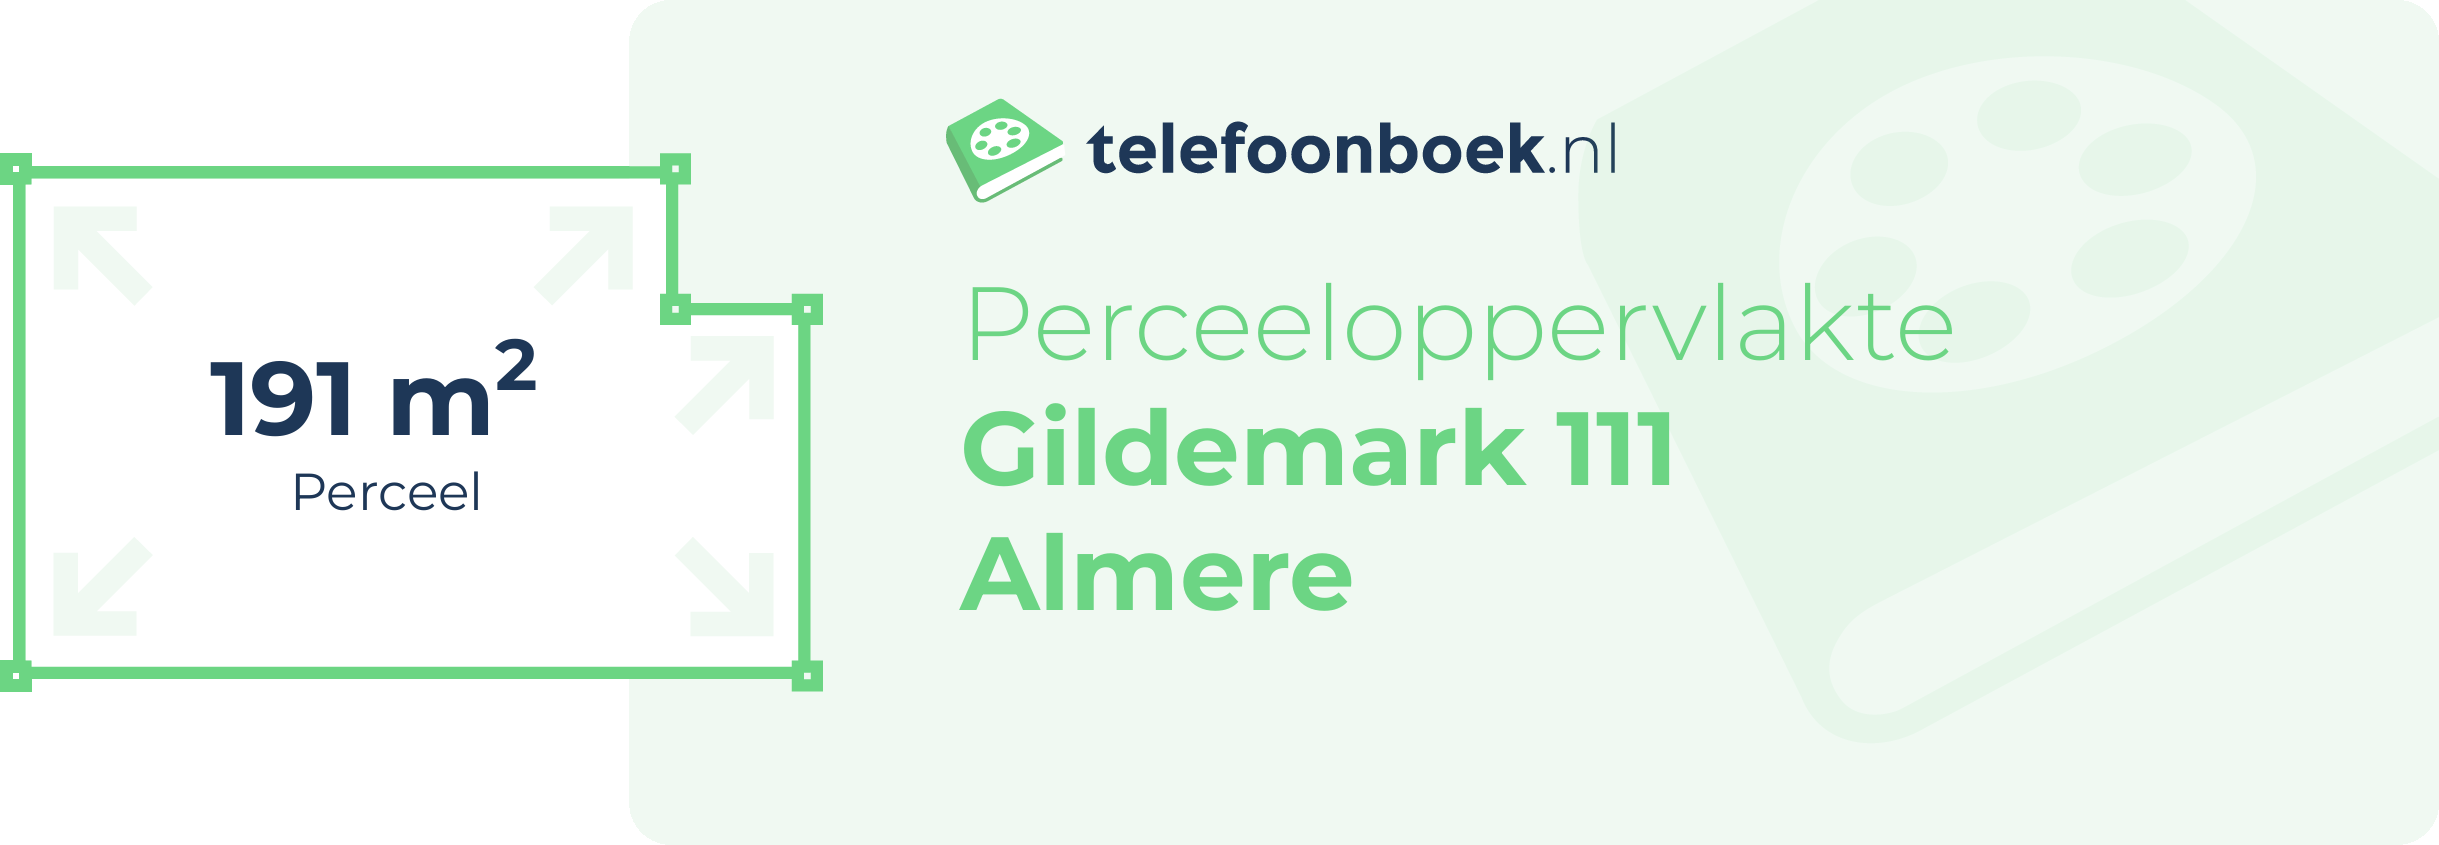 Perceeloppervlakte Gildemark 111 Almere